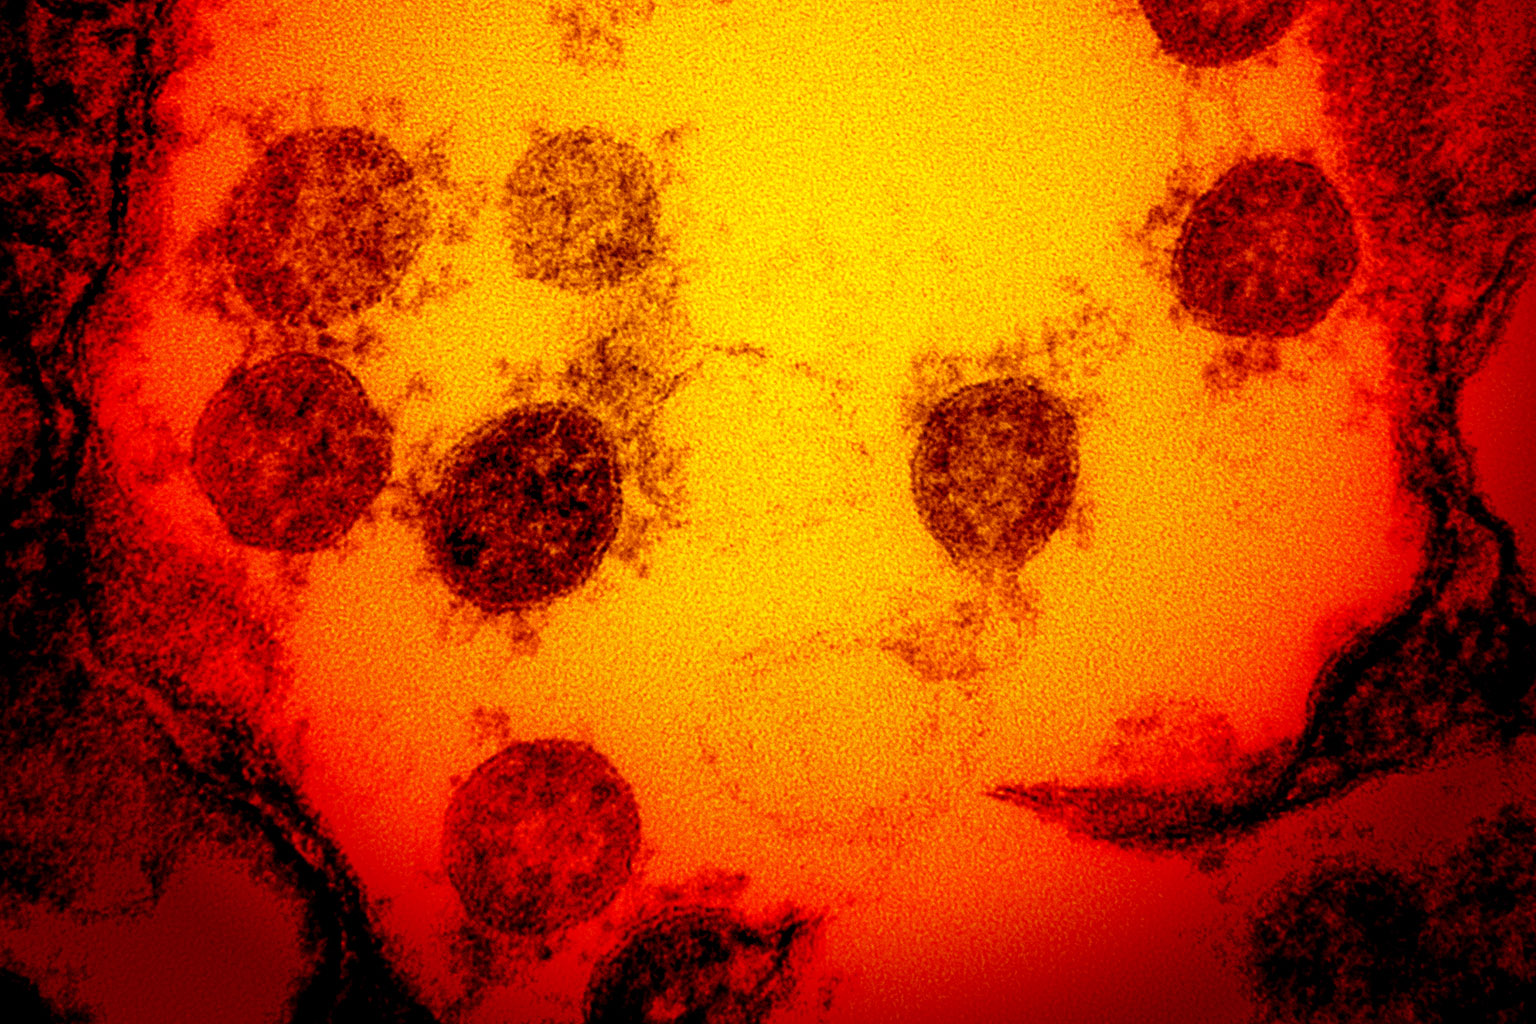 microscopic image of SARS-CoV-2